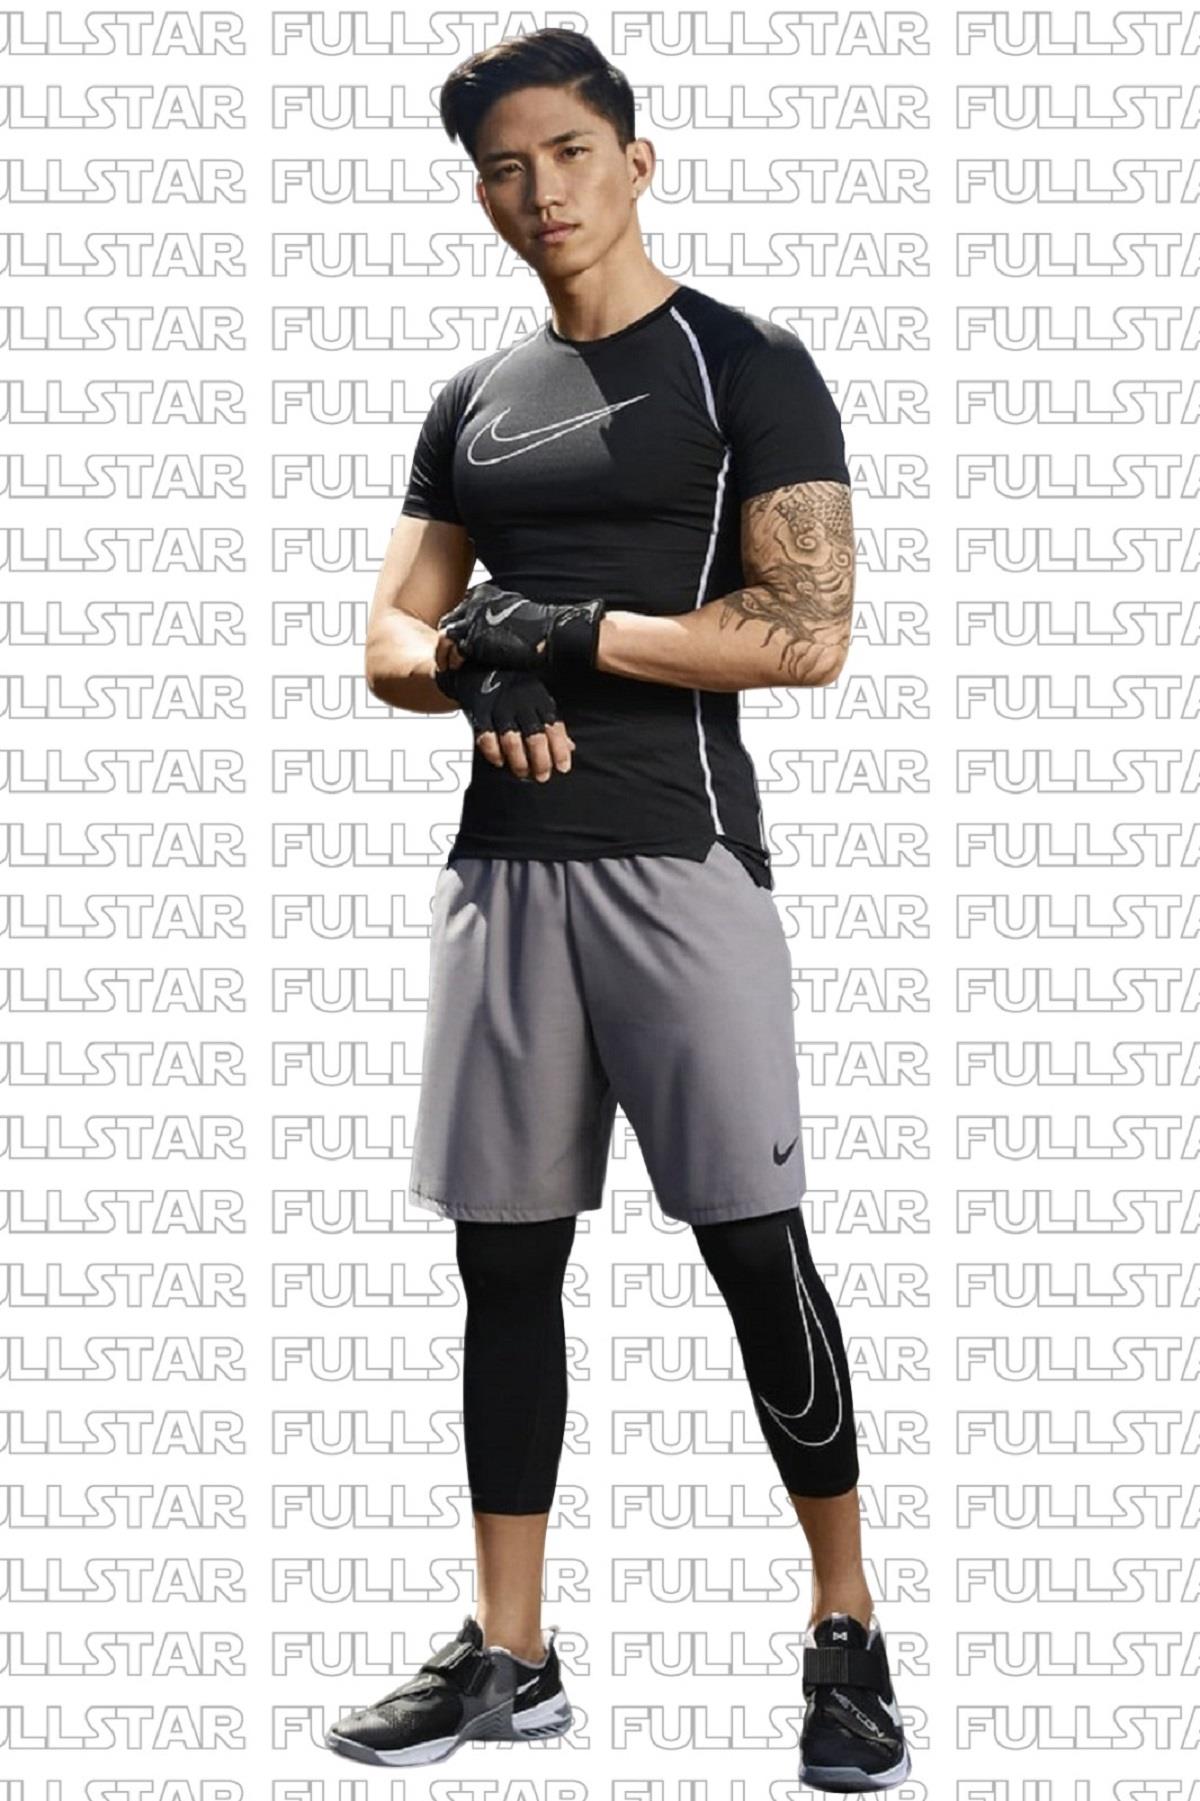 Nike Pro Dri Fit Men's Tight Fit Short Sleeve Top Slim Fit Body Tişört Siyah